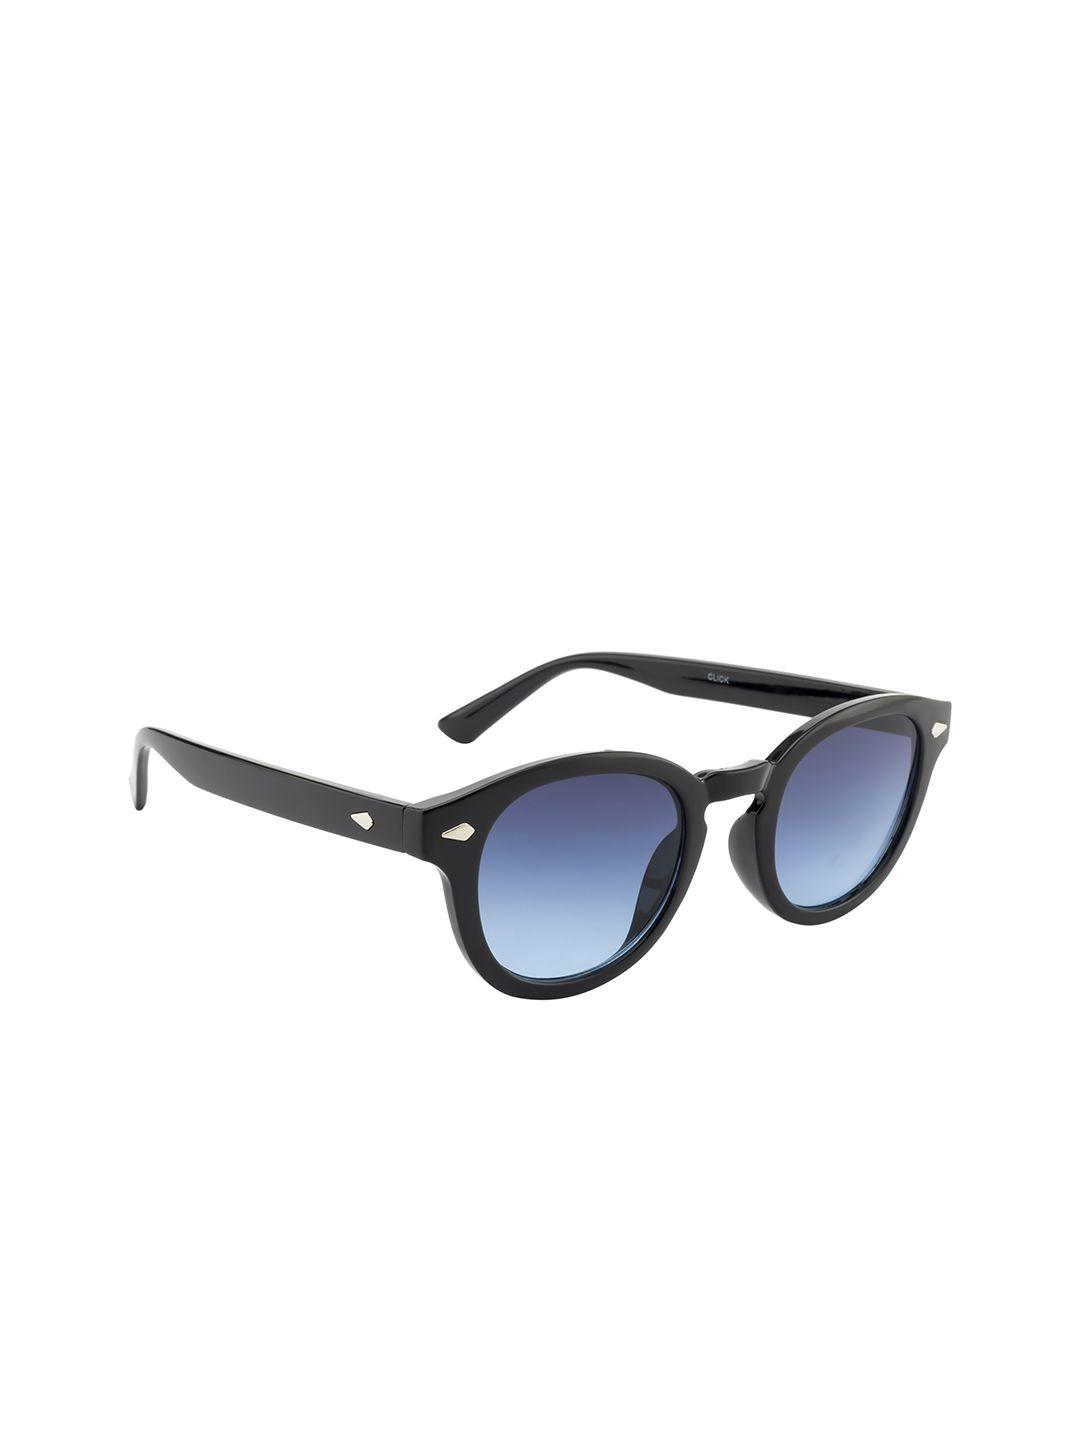 mast-&-harbourfull-rim-round-sunglasses-with-uv-protected-lens-mh-m25126